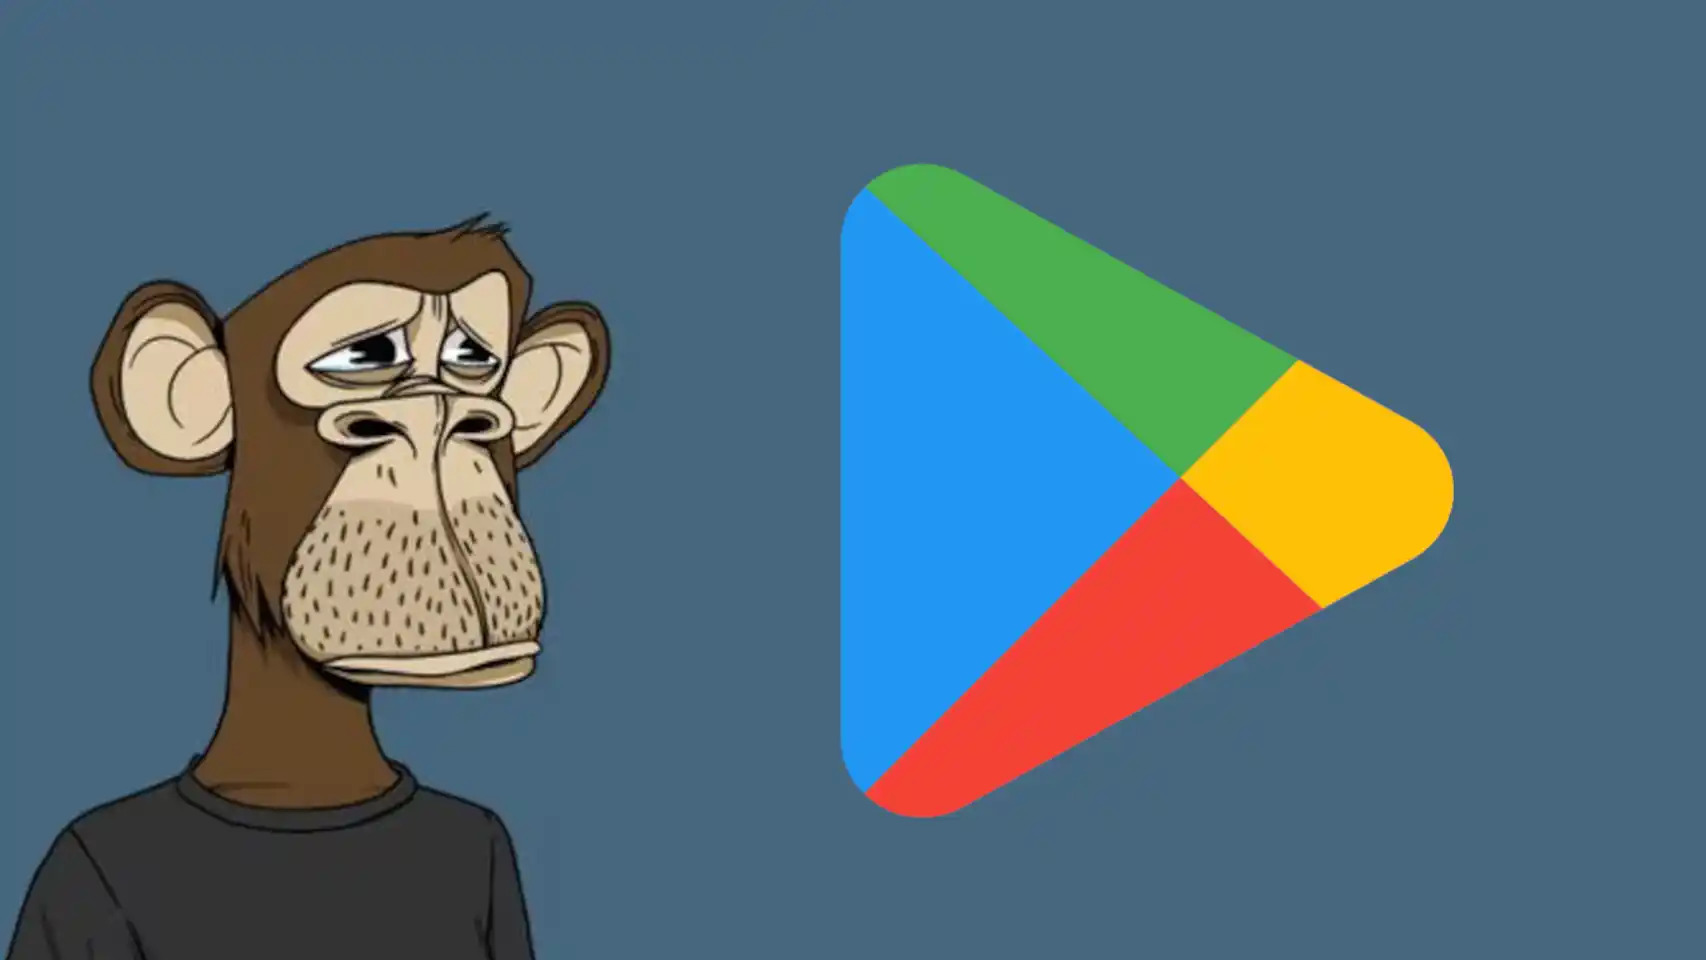 About: Bored Ape Avatar NFT Creator (Google Play version)